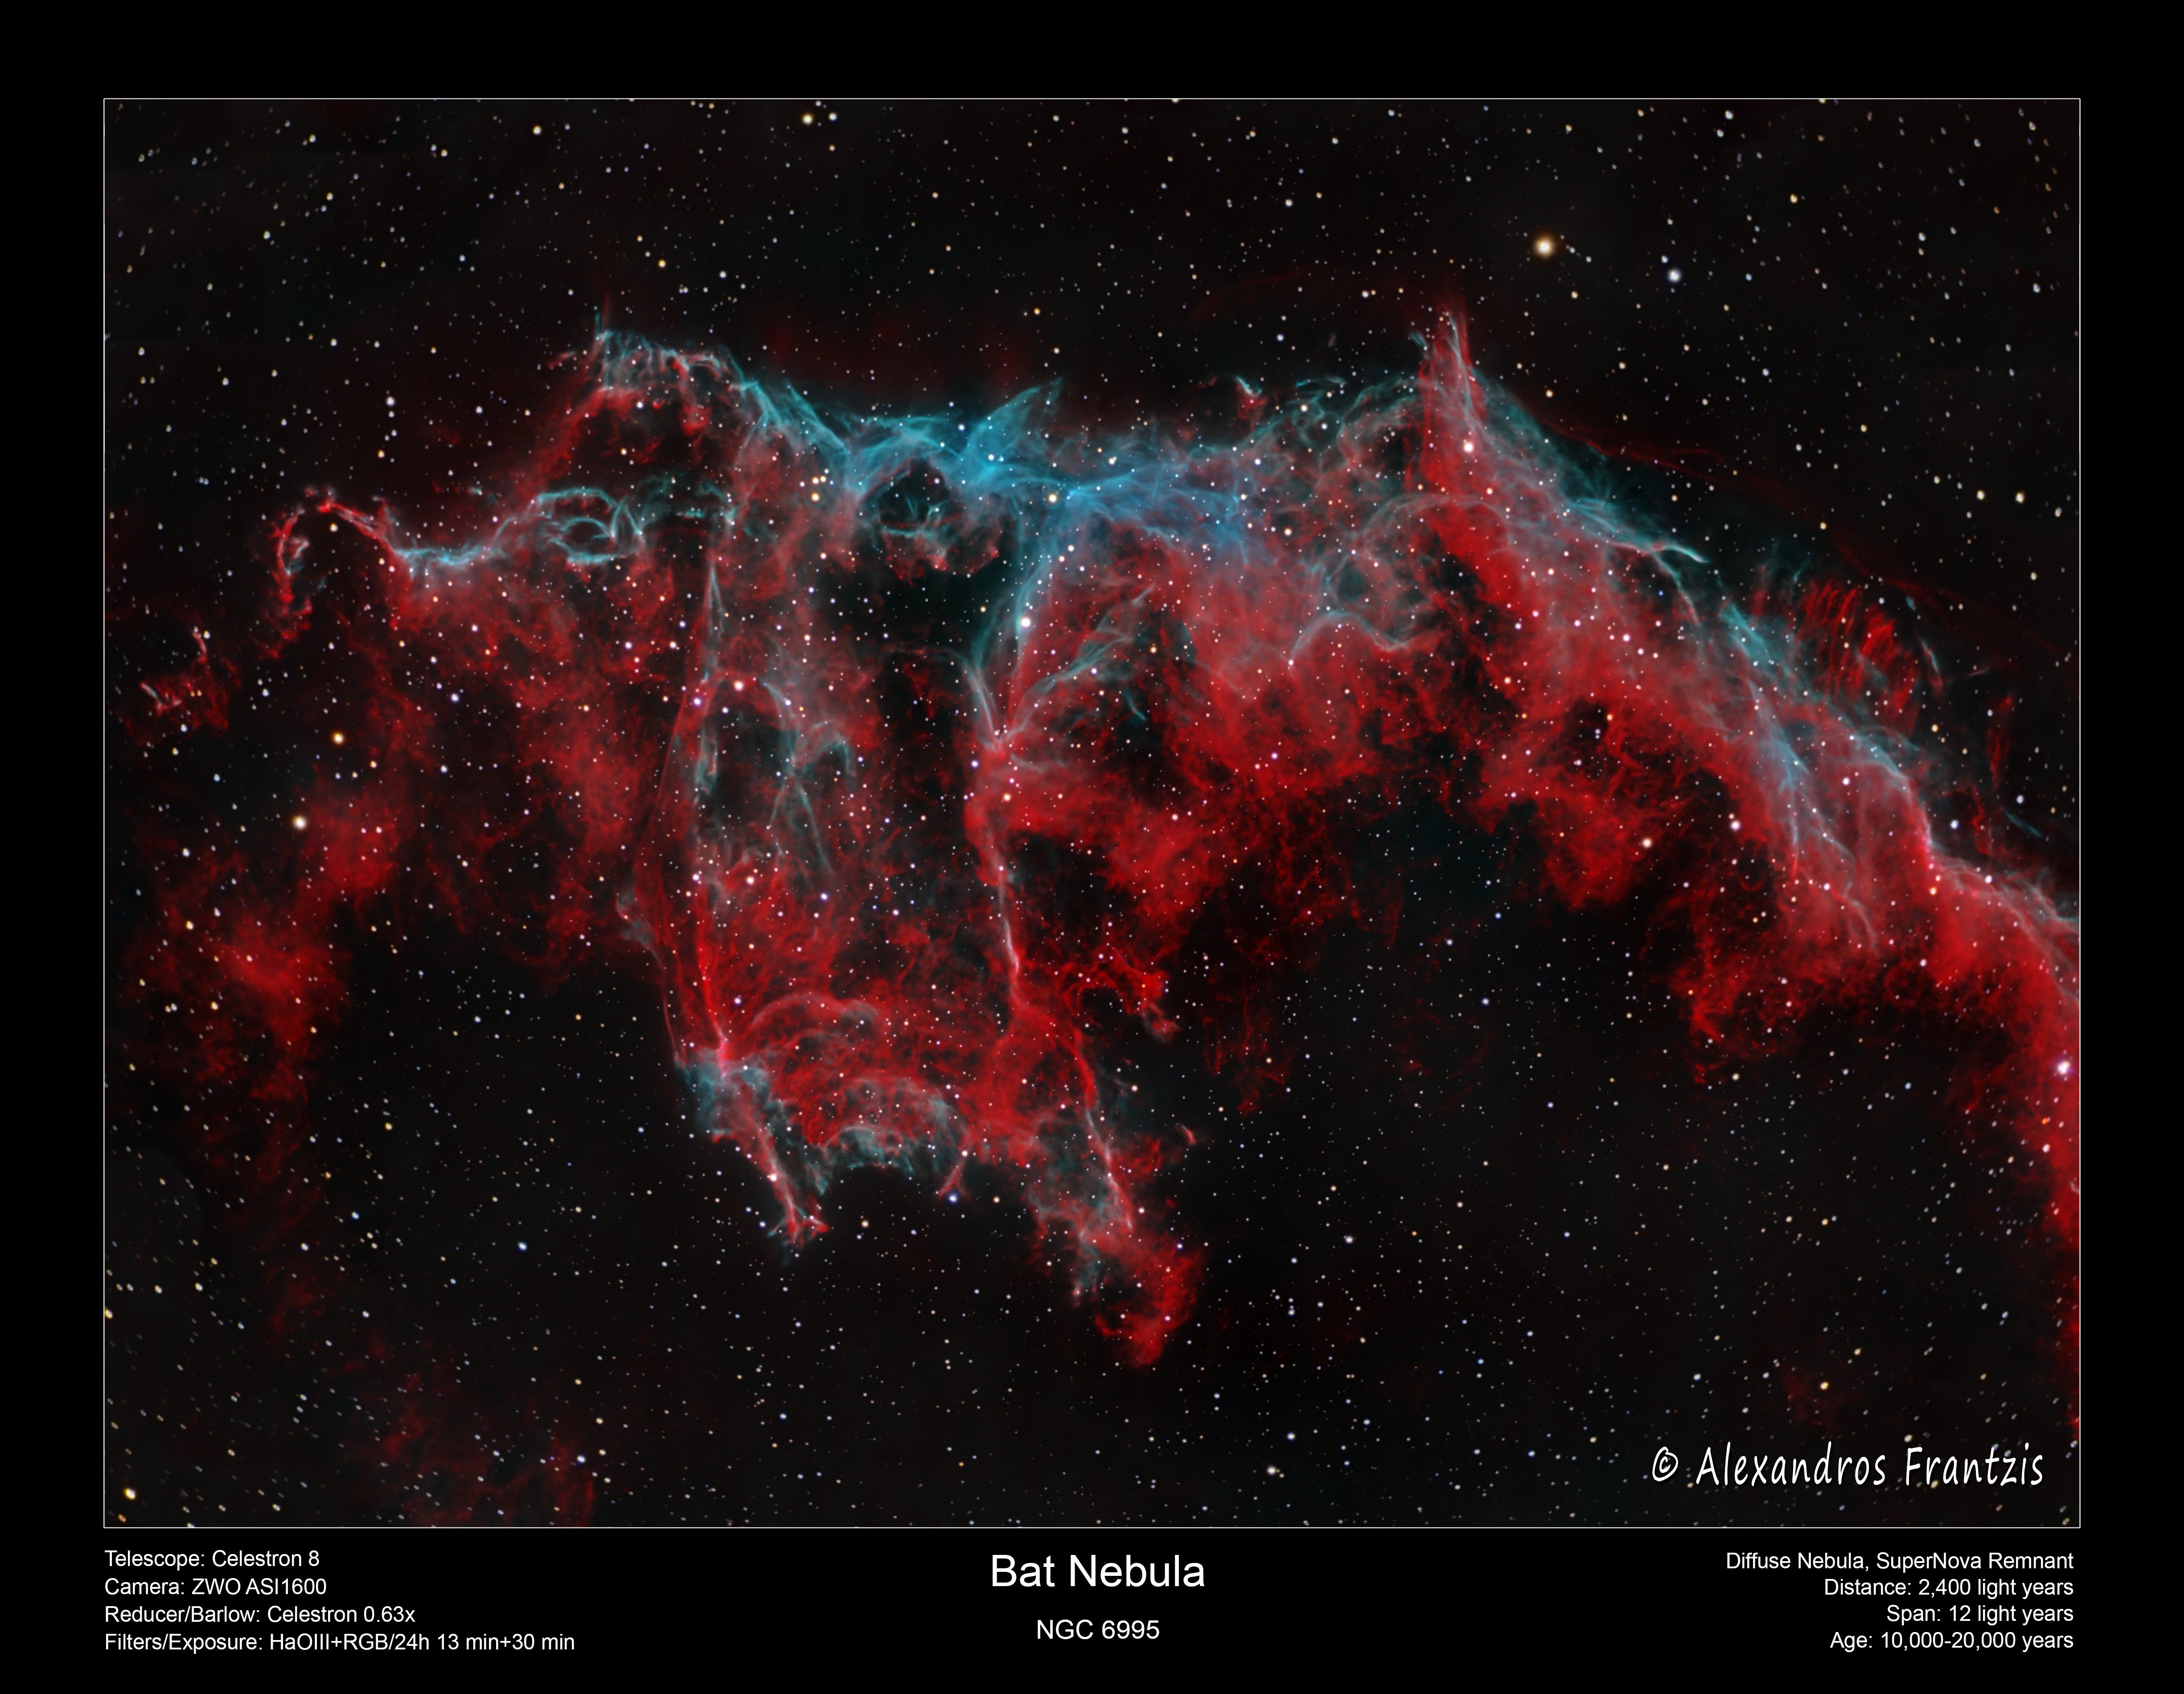 2022-7-7, 8 & 2022-8-7, 8, NGC 6995 Bat Nebula, HaOIII 24h 13 min, RGB 30 min, C8, Reducer 0.63x, ASI1600 framed